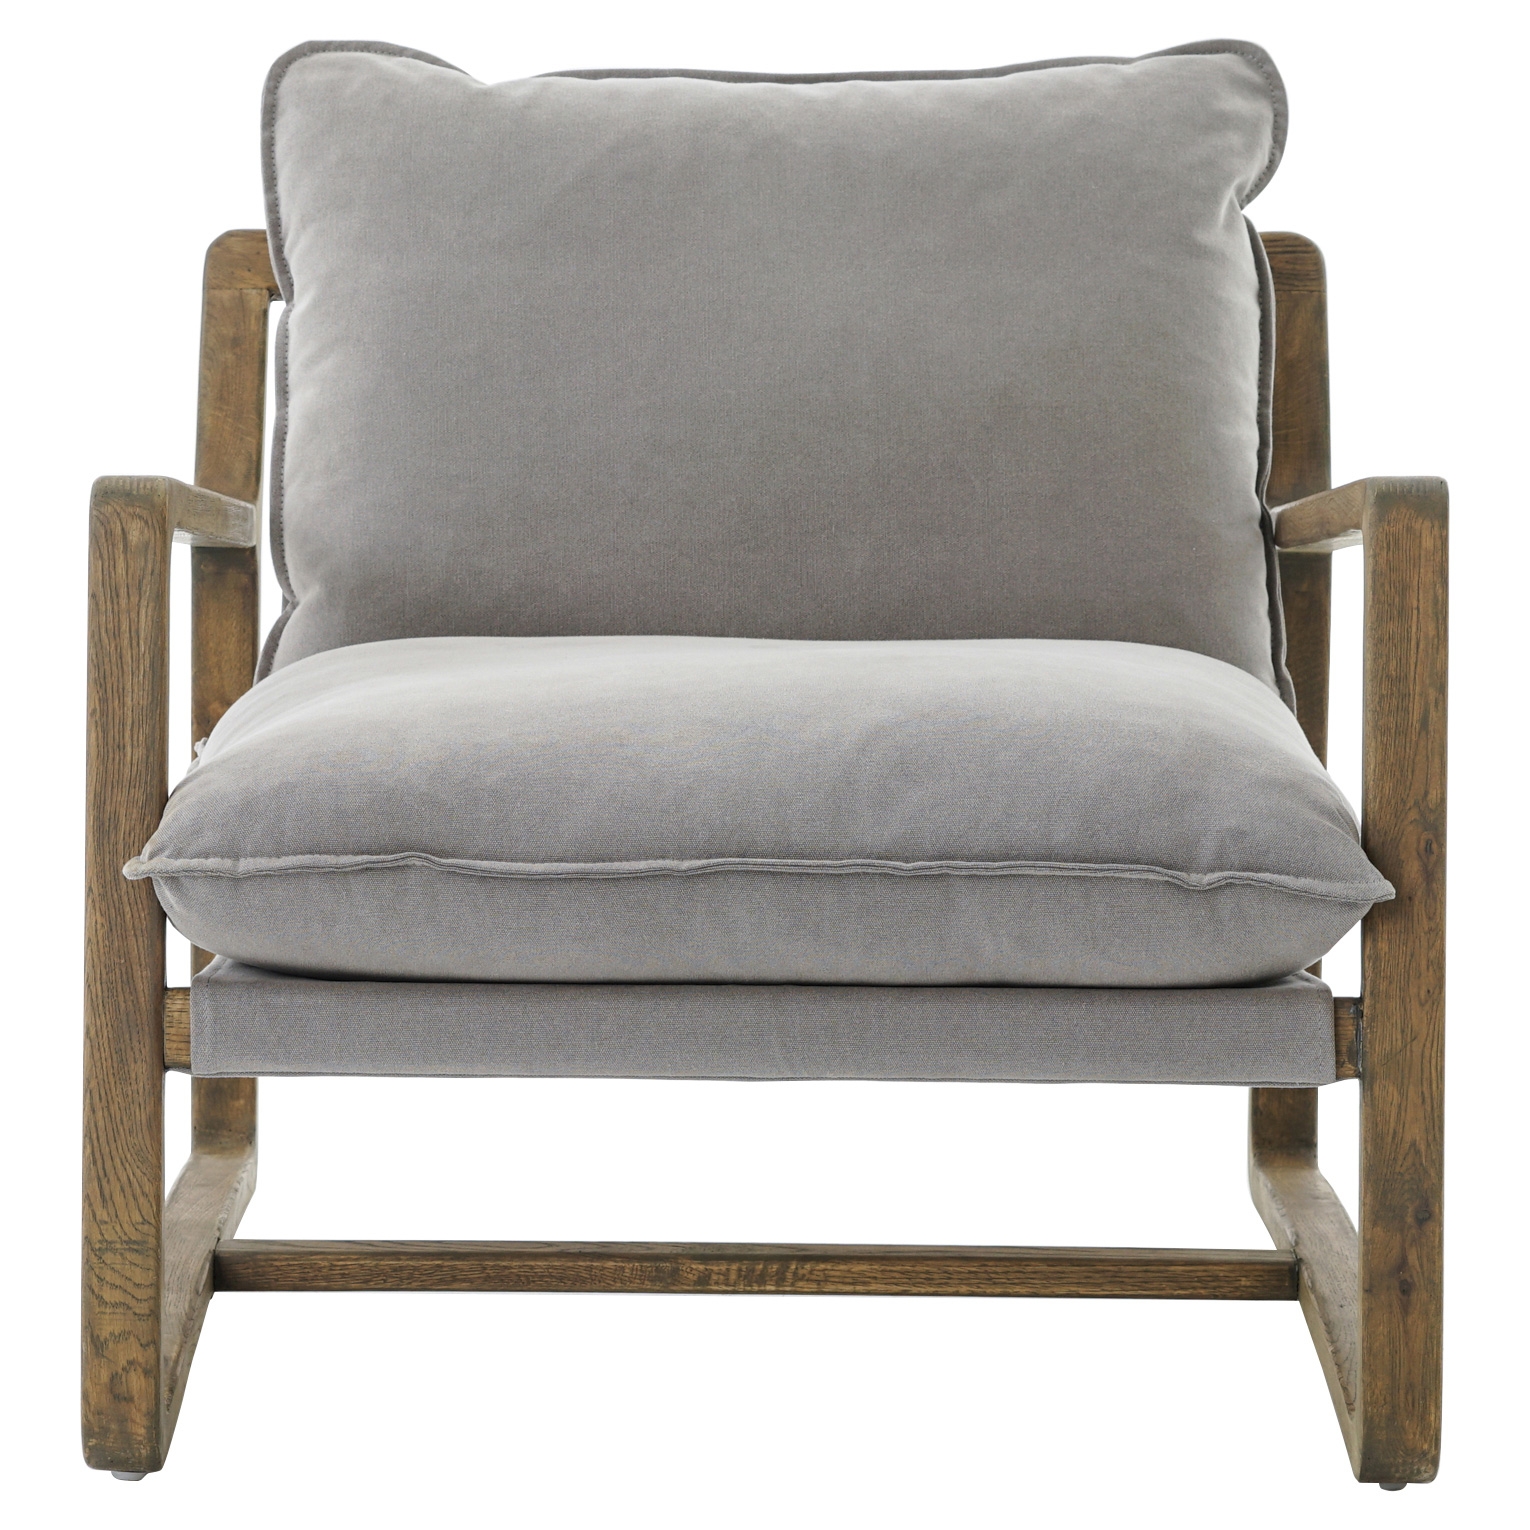 Antonia Rustic Lodge Grey Pillow Brown Wood Living Room Arm Chair - Image 1